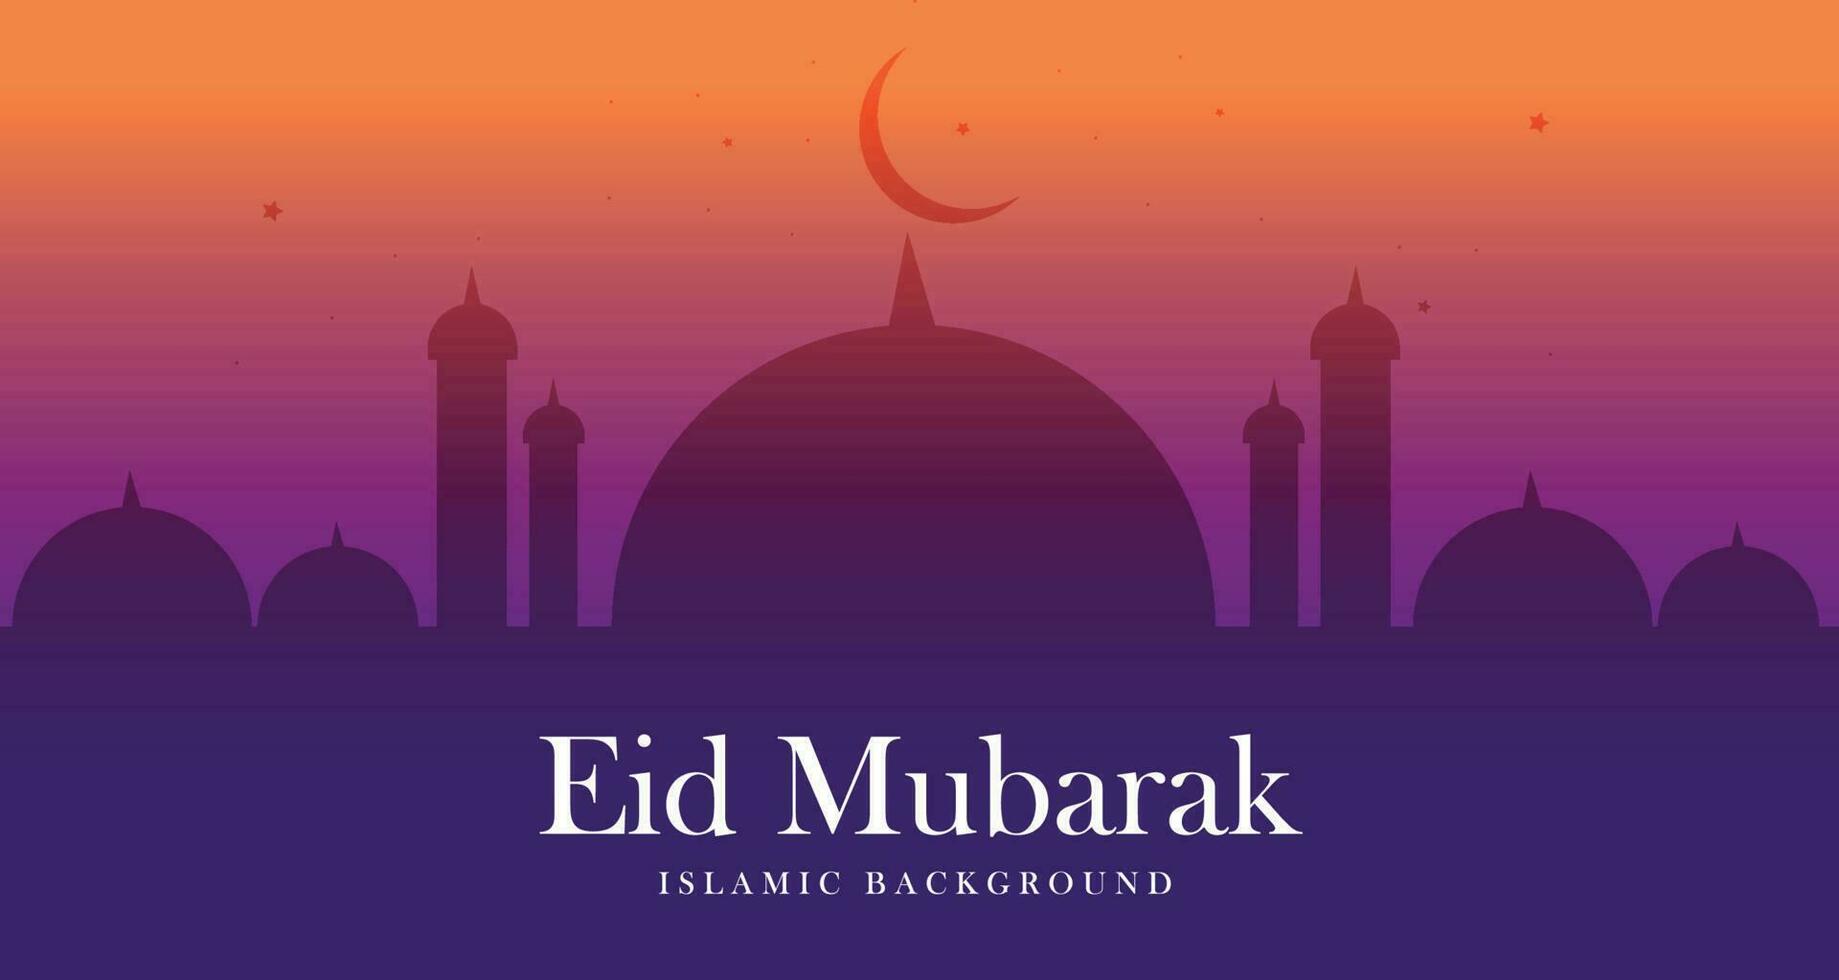 Eid Mubarak Art Illustration Background Design Template vector